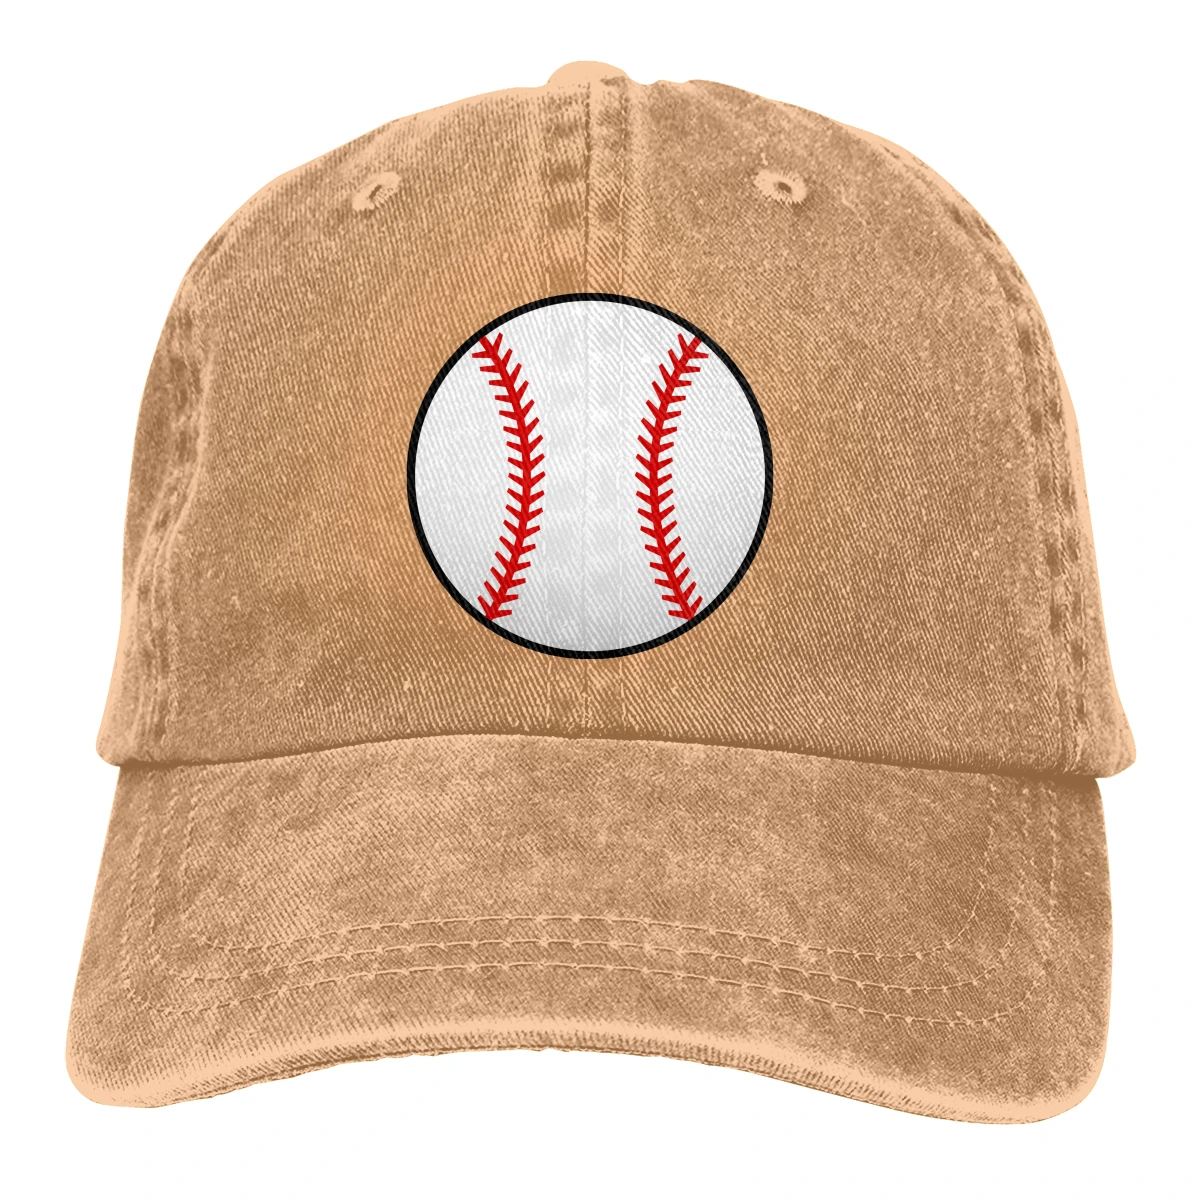 Baseball Retro cotton Washed Baseball Cap Cowboy Hat Fitted Cap Snapback Hat for Men Women Casual Cap Sun Hat Outdoor Cap